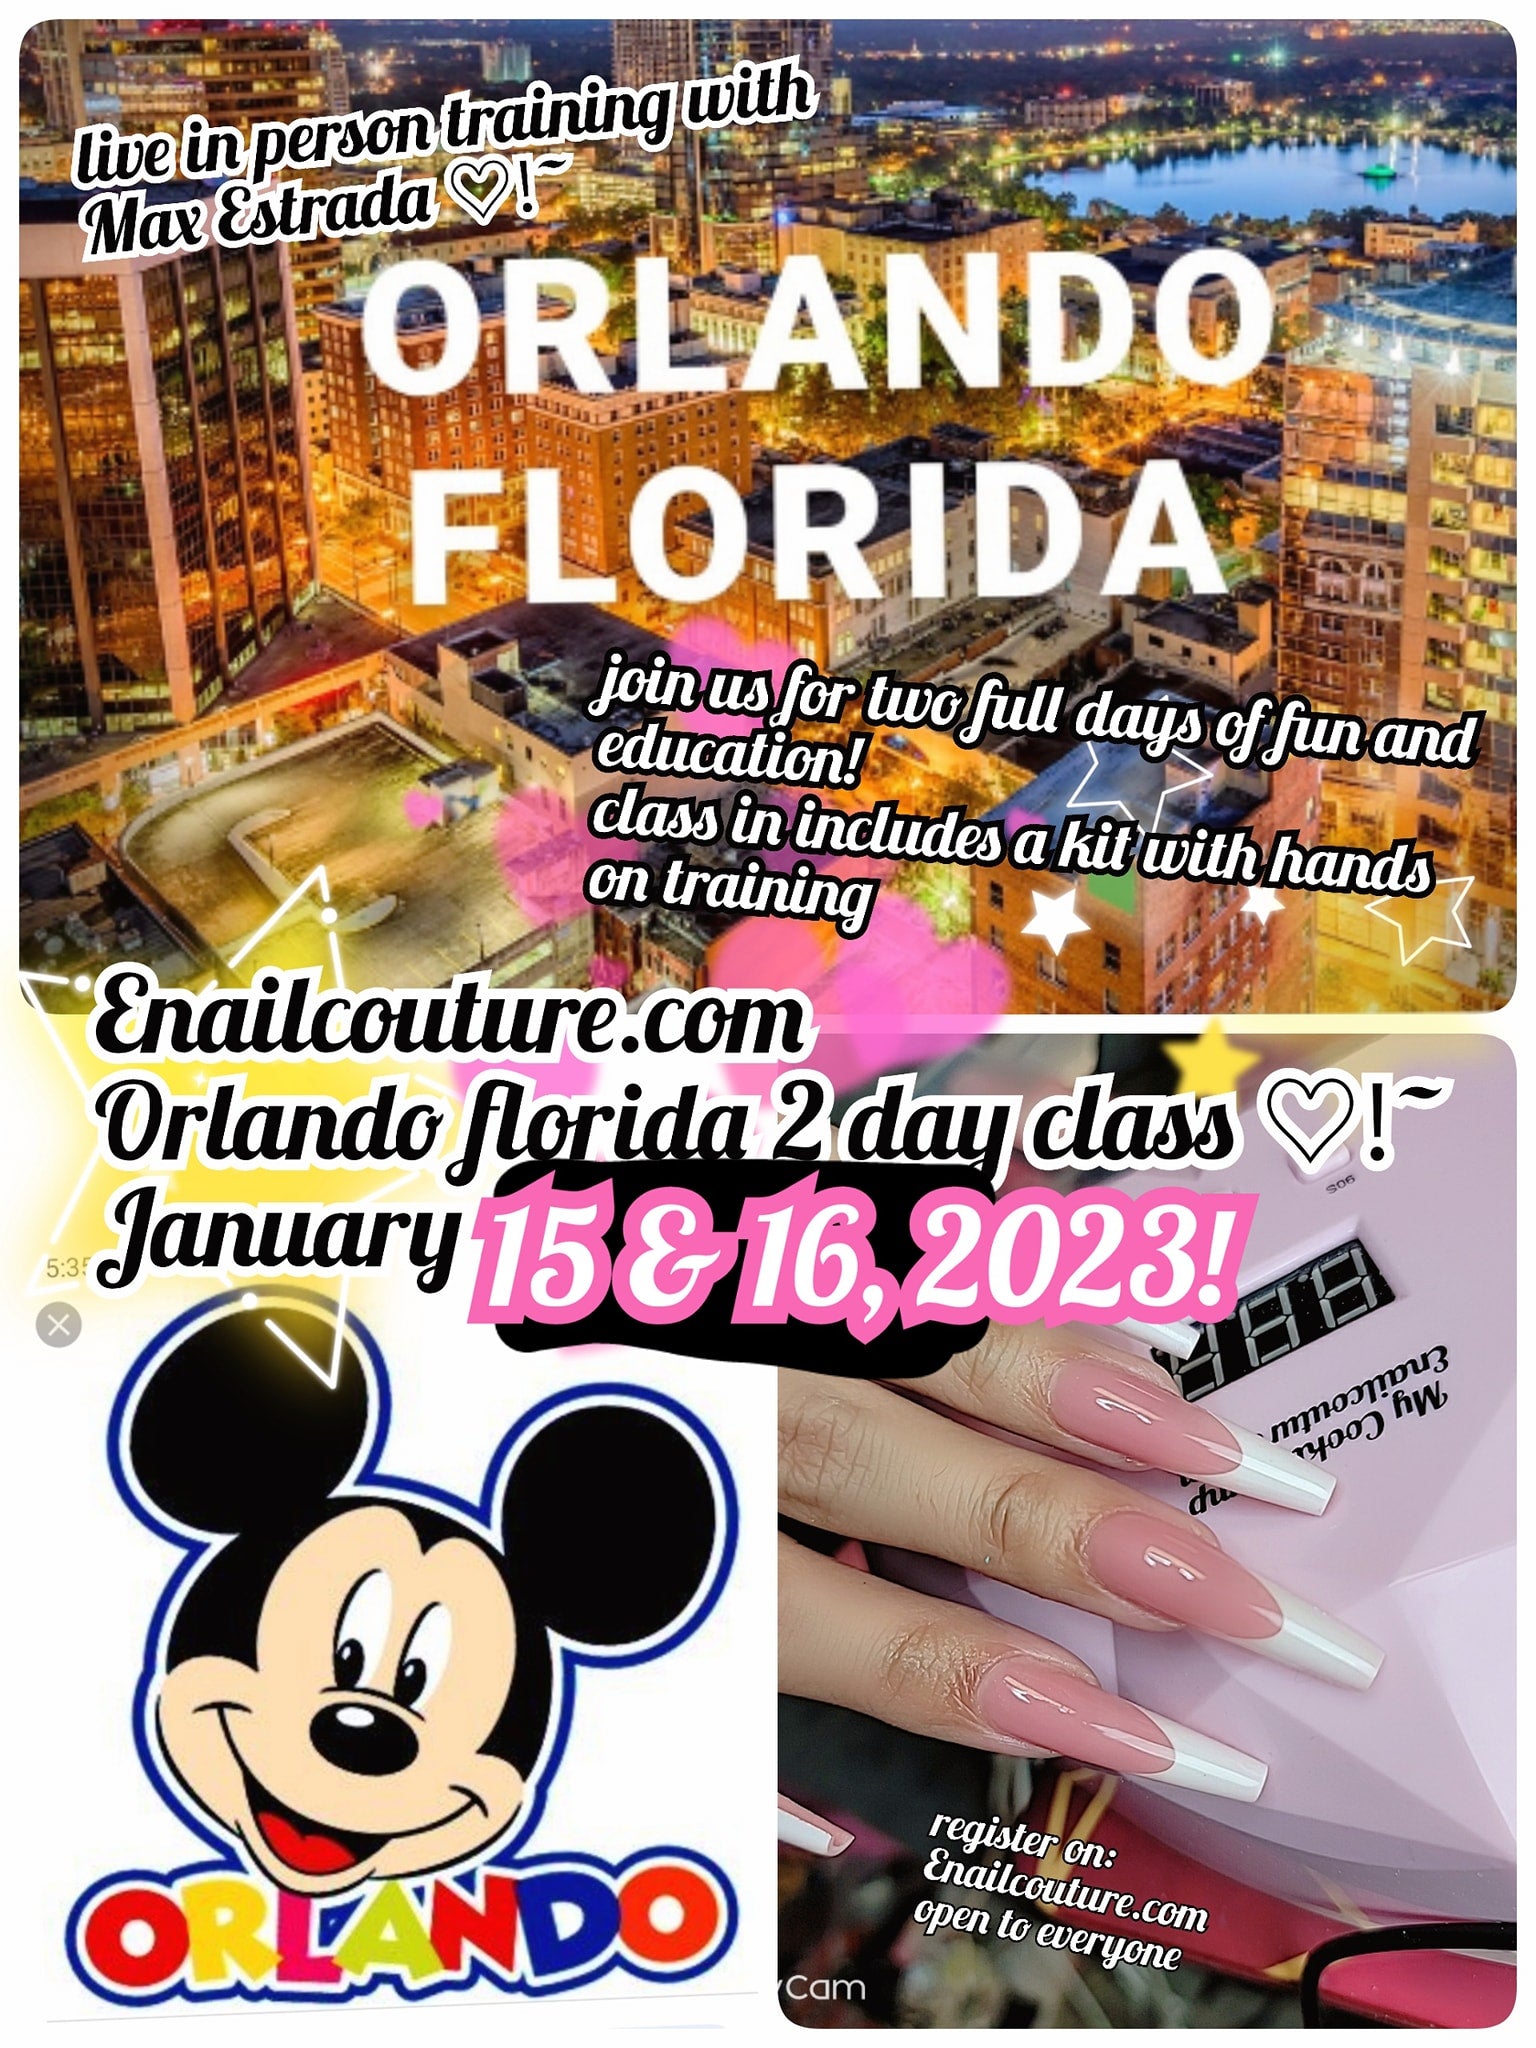 Orlando Florida 2 day nail art festival class !~ January 15&16, 2023